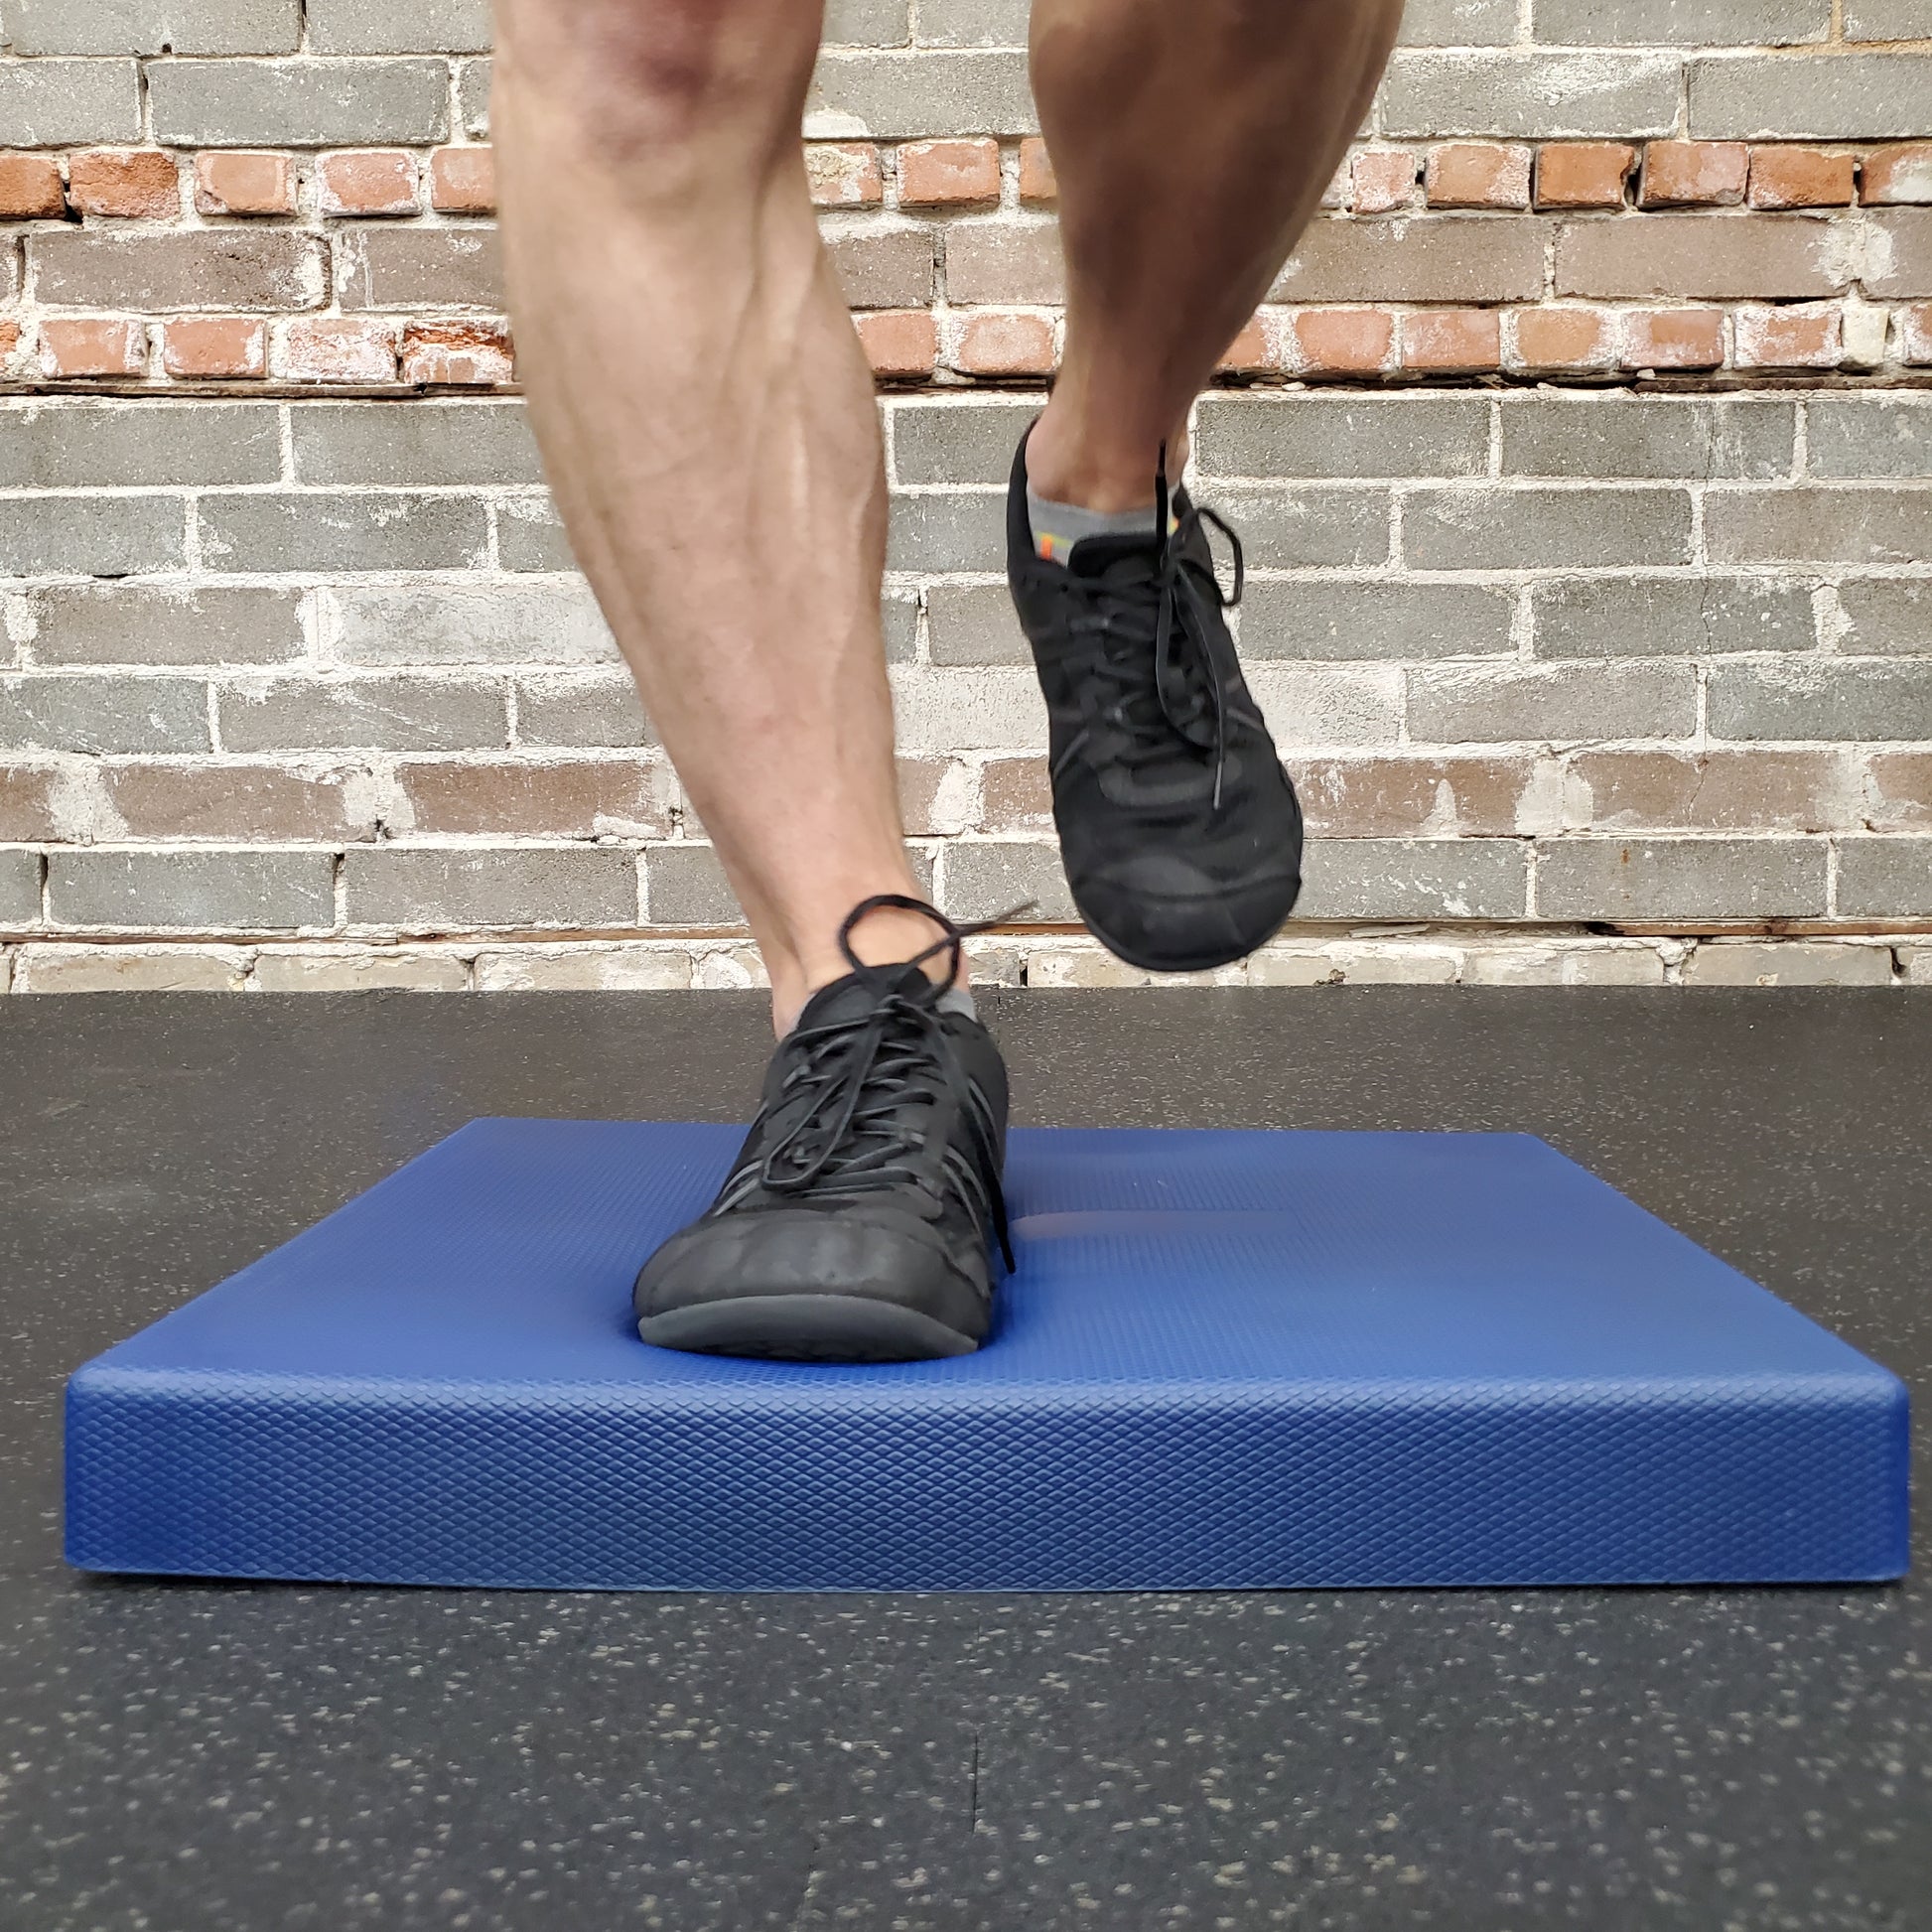 Tactical Balance Pad - Foam Balance Pad for Stability & Balance